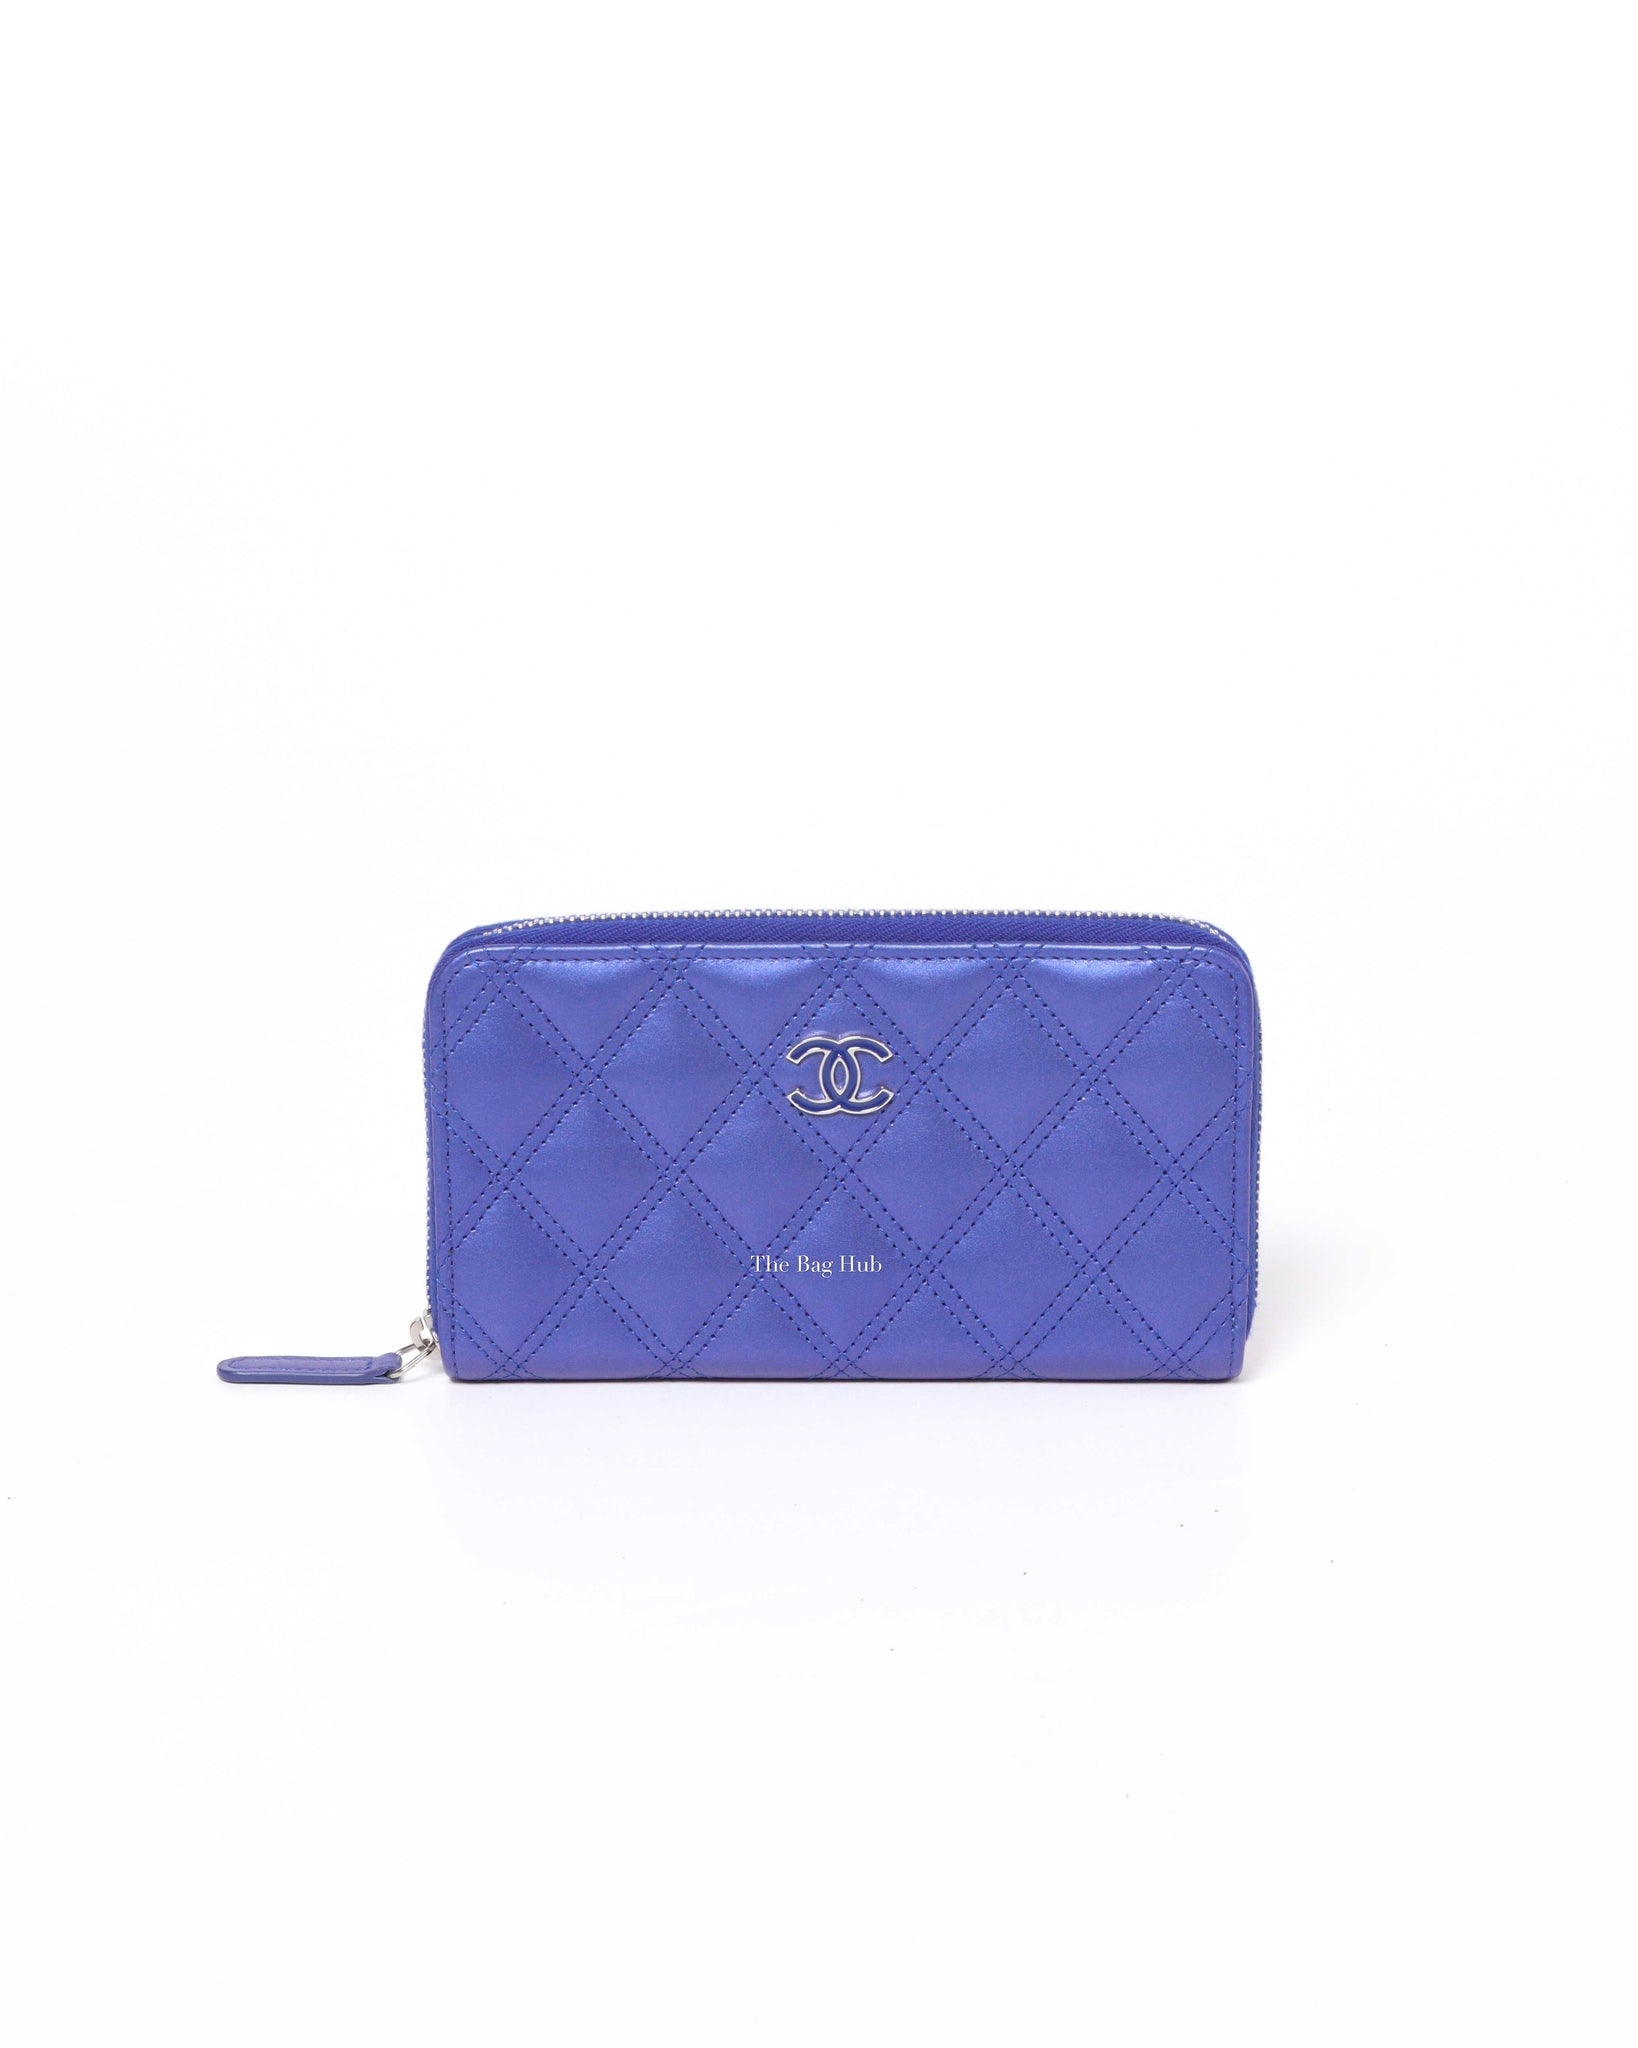 Chanel Blue Quilted Lambskin Zip Around Wallet Q6ADVD1IBB005